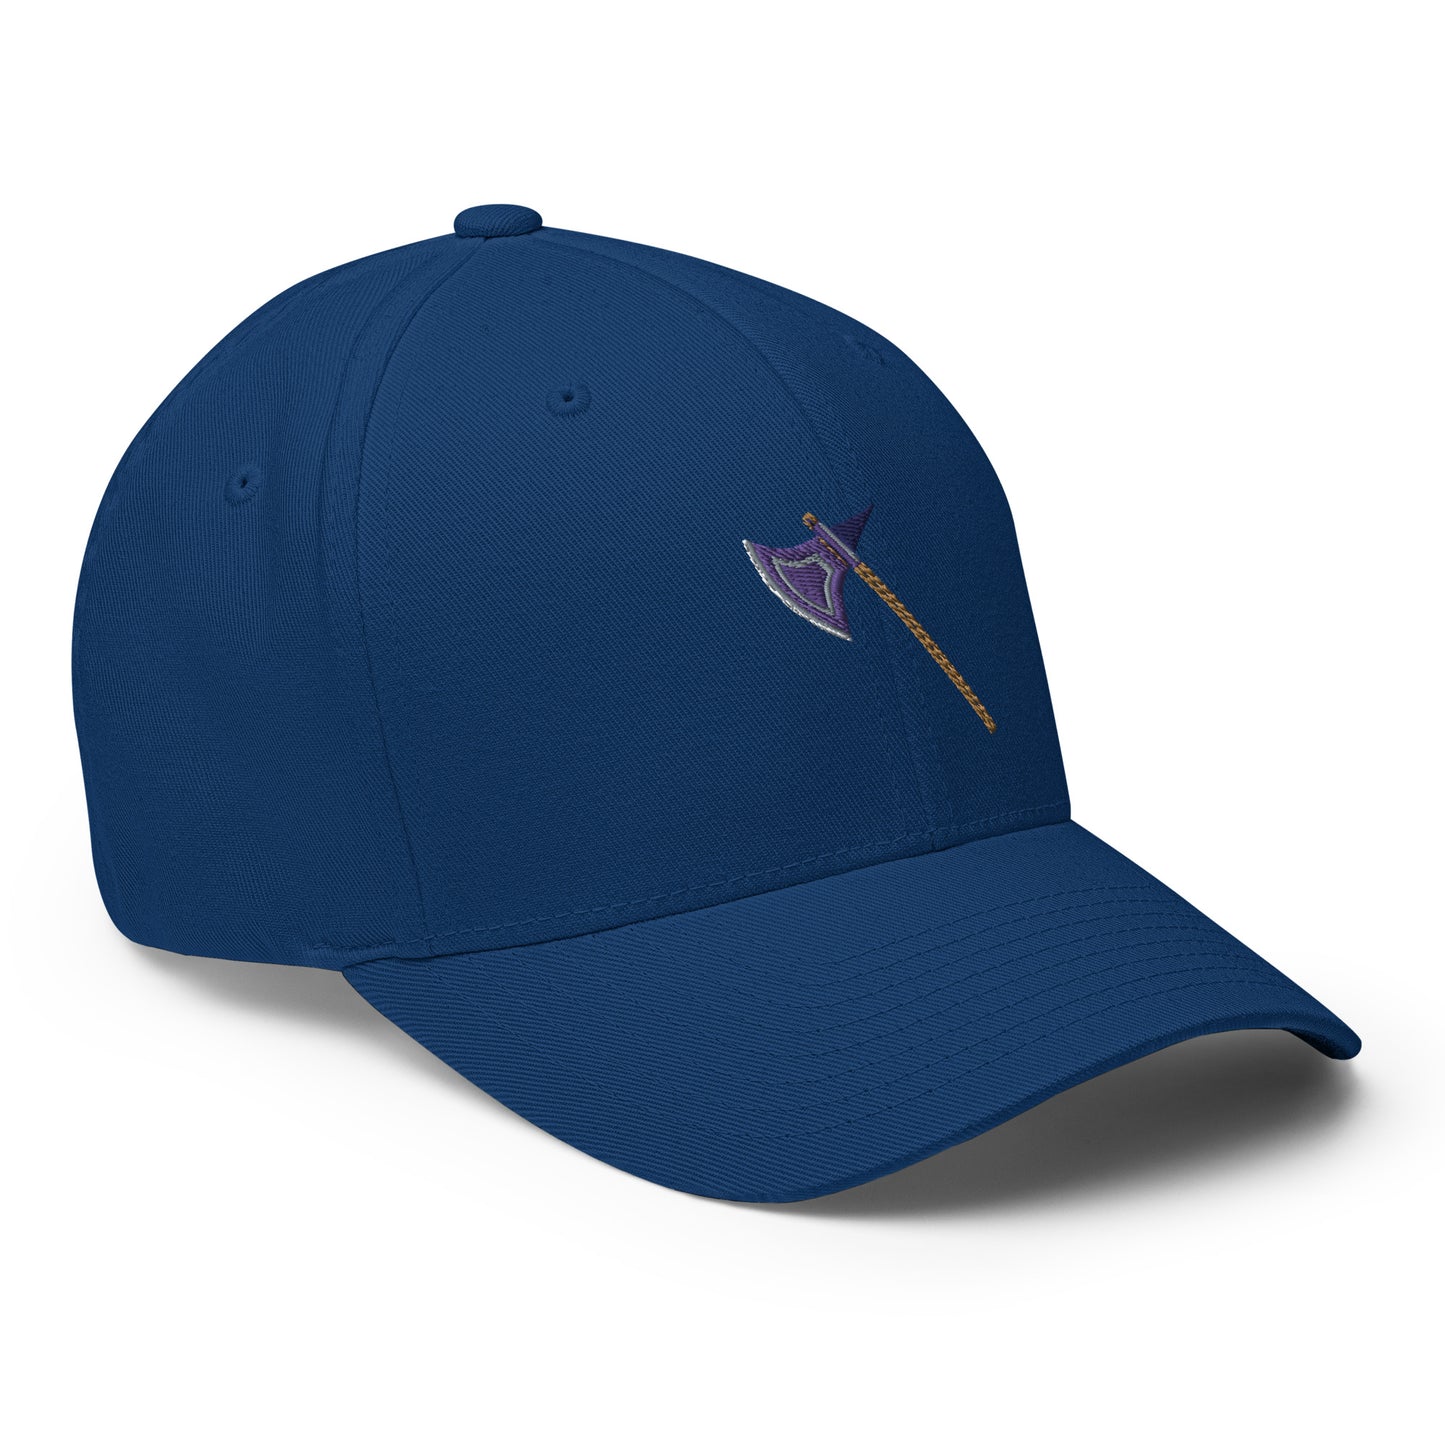 Baseball Cap with Axe Symbol